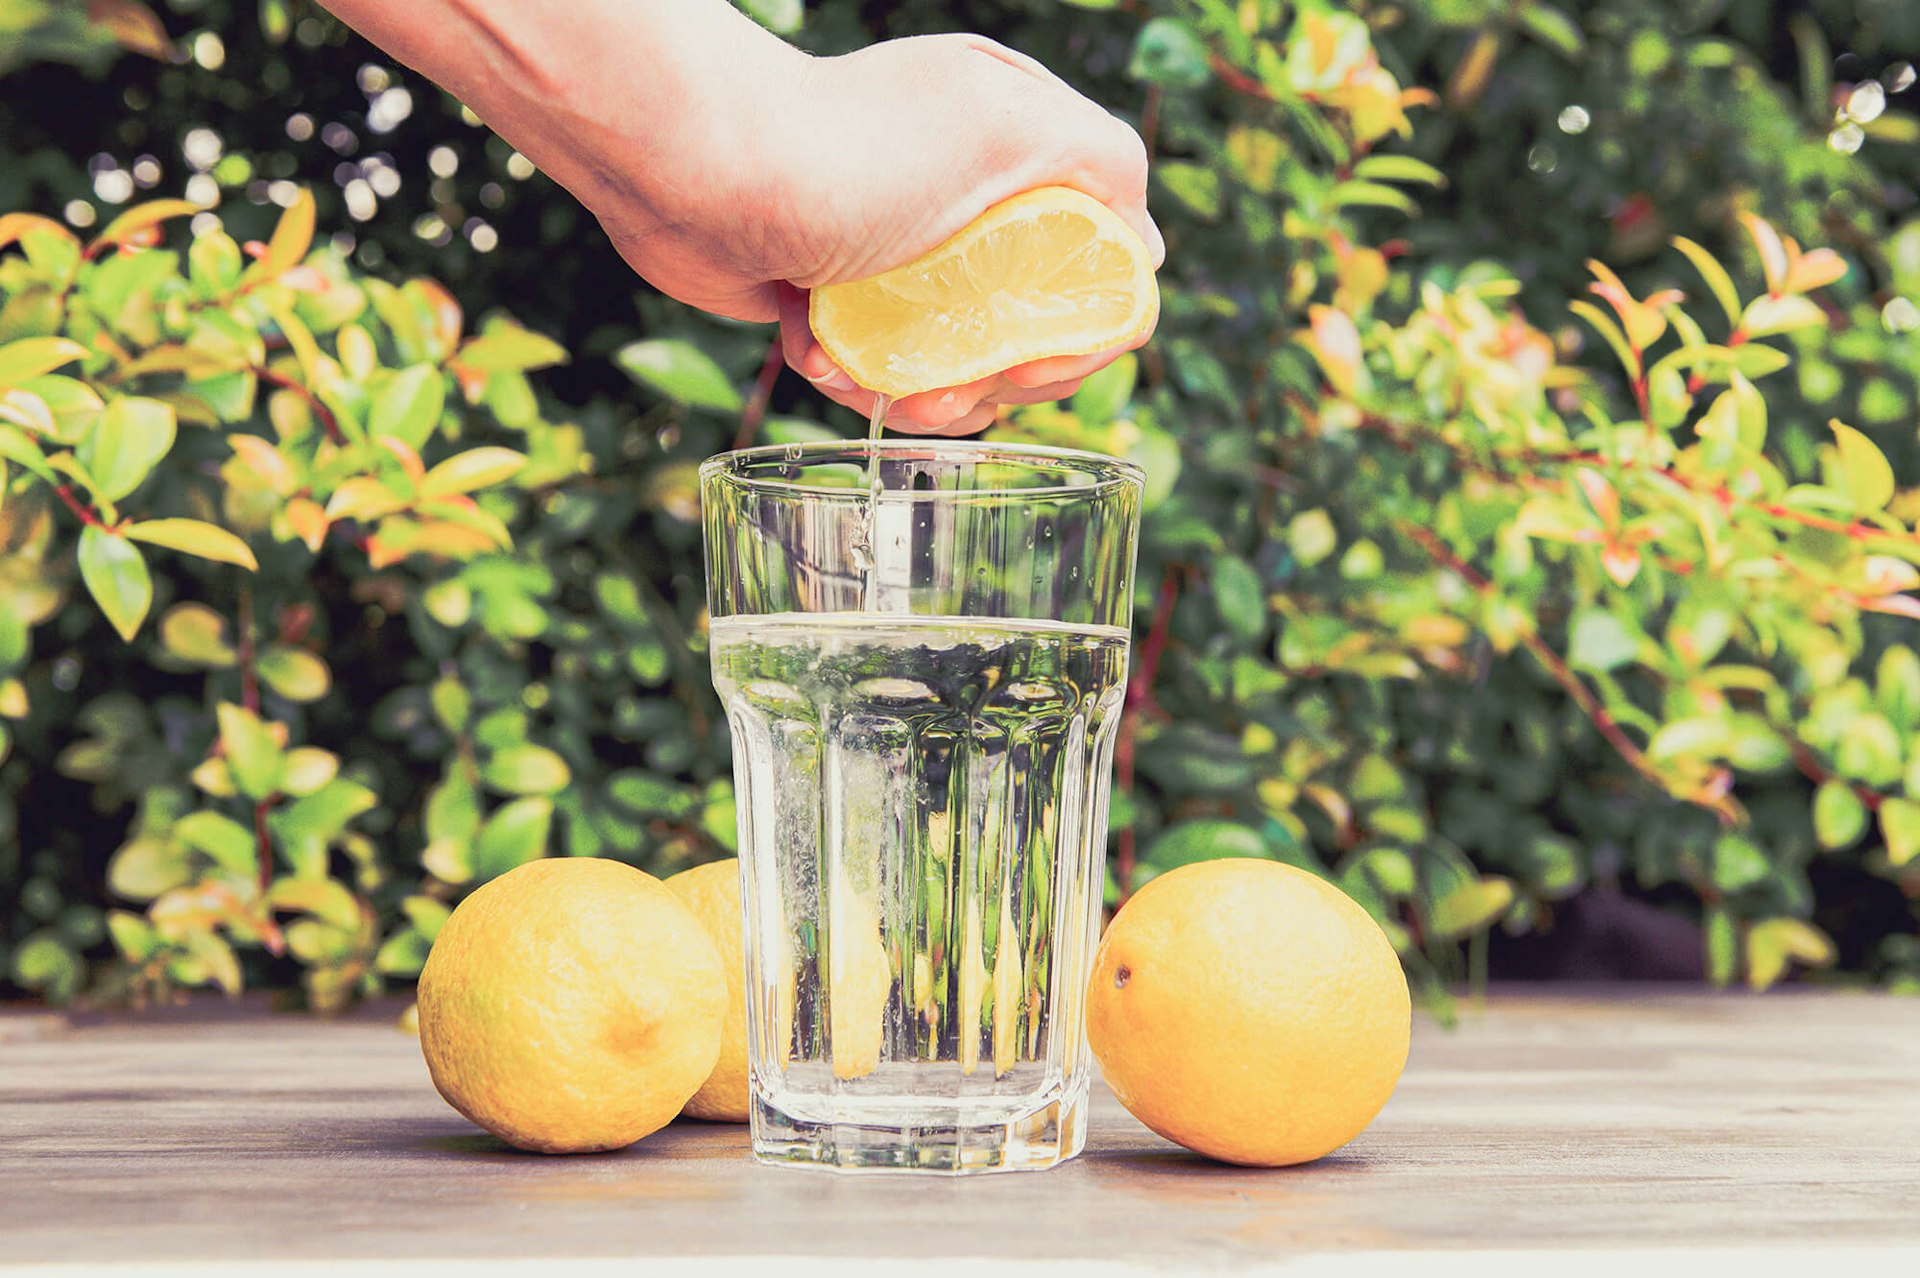 A hand squeezing half a lemon into a glass.